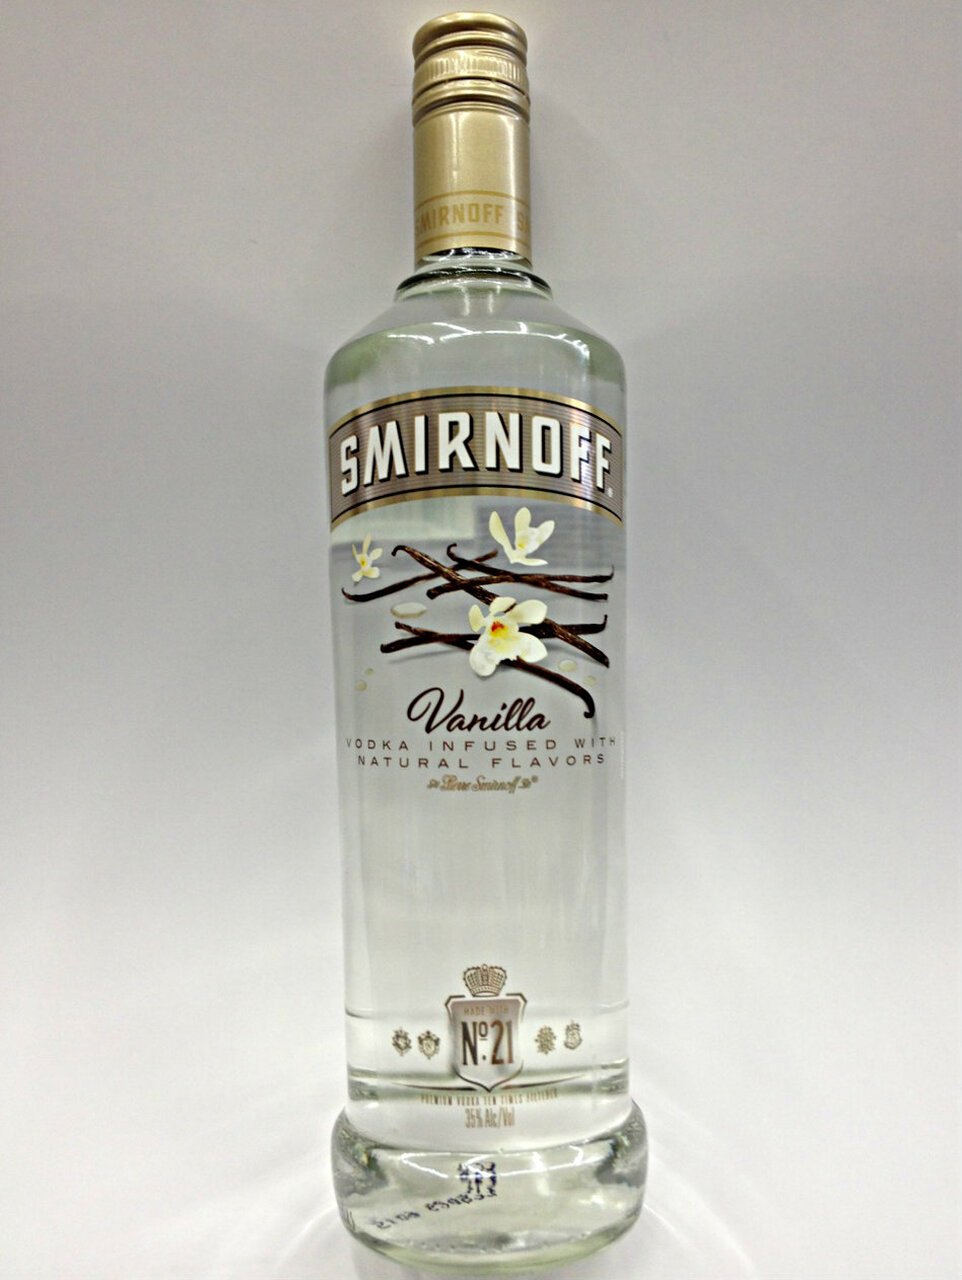 Smirnoff Vanilla Infused Vodka